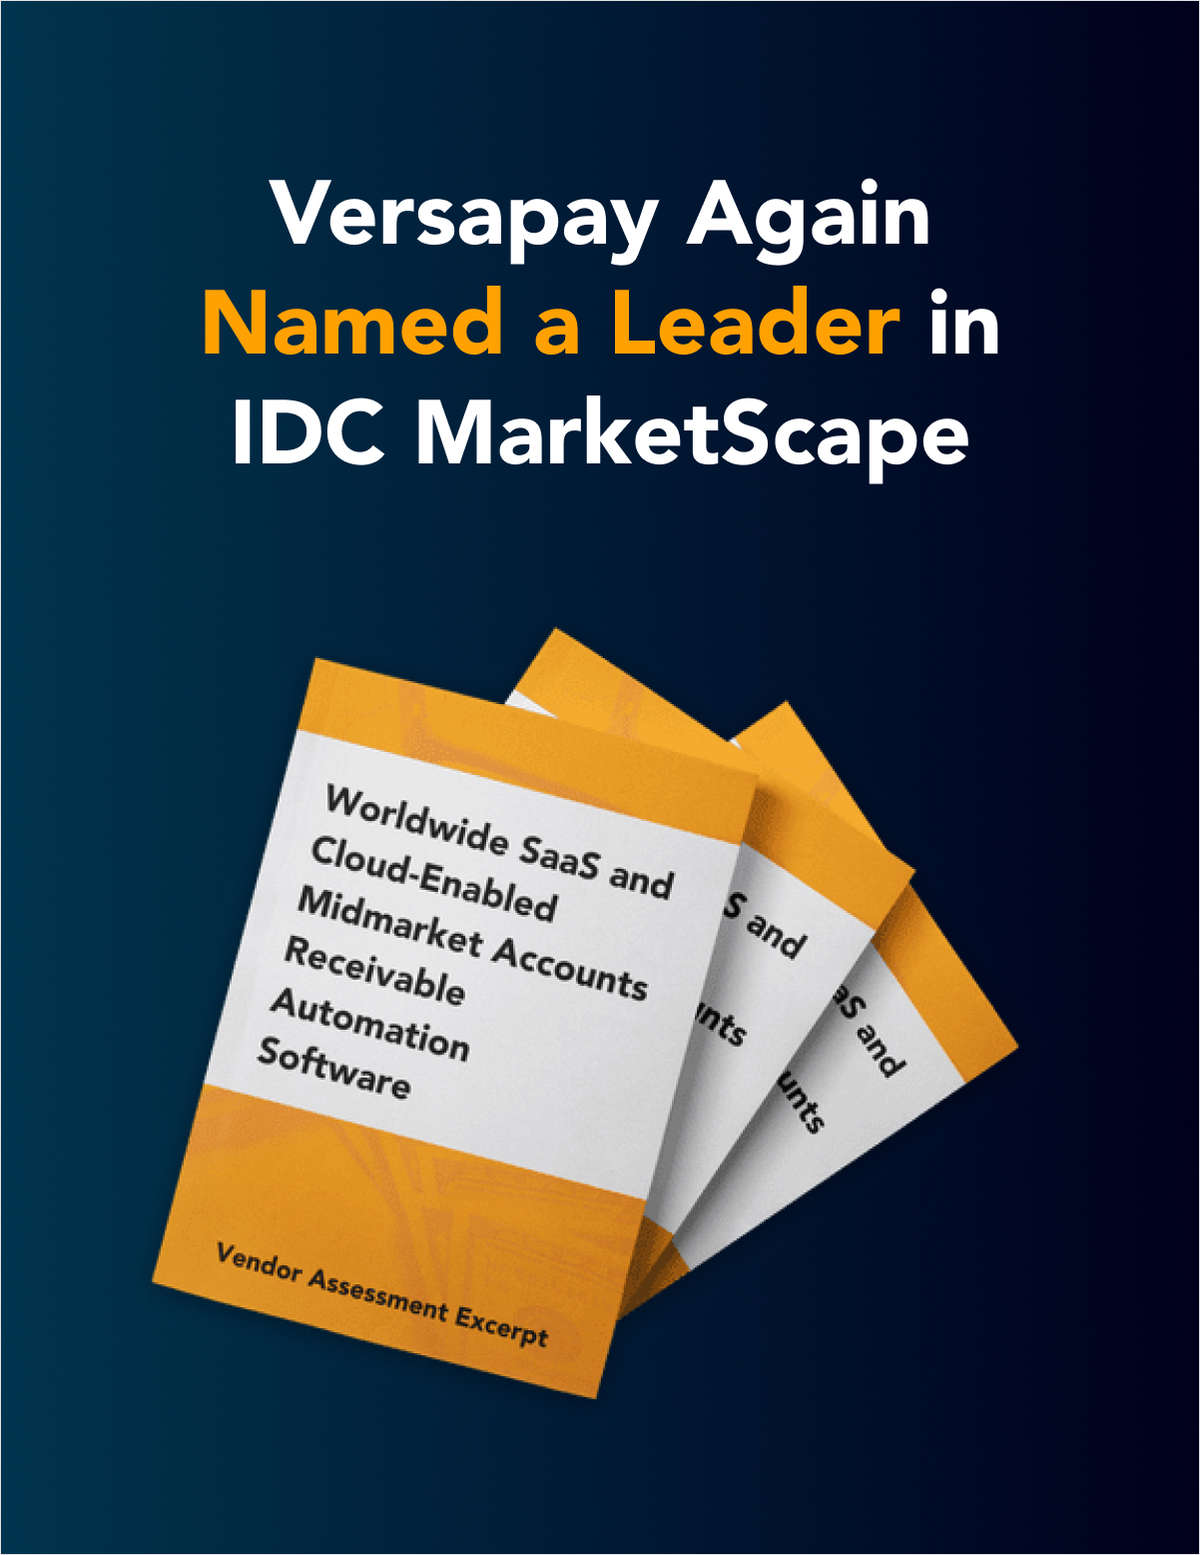 Versapay Again Named a Leader in IDC MarketScape